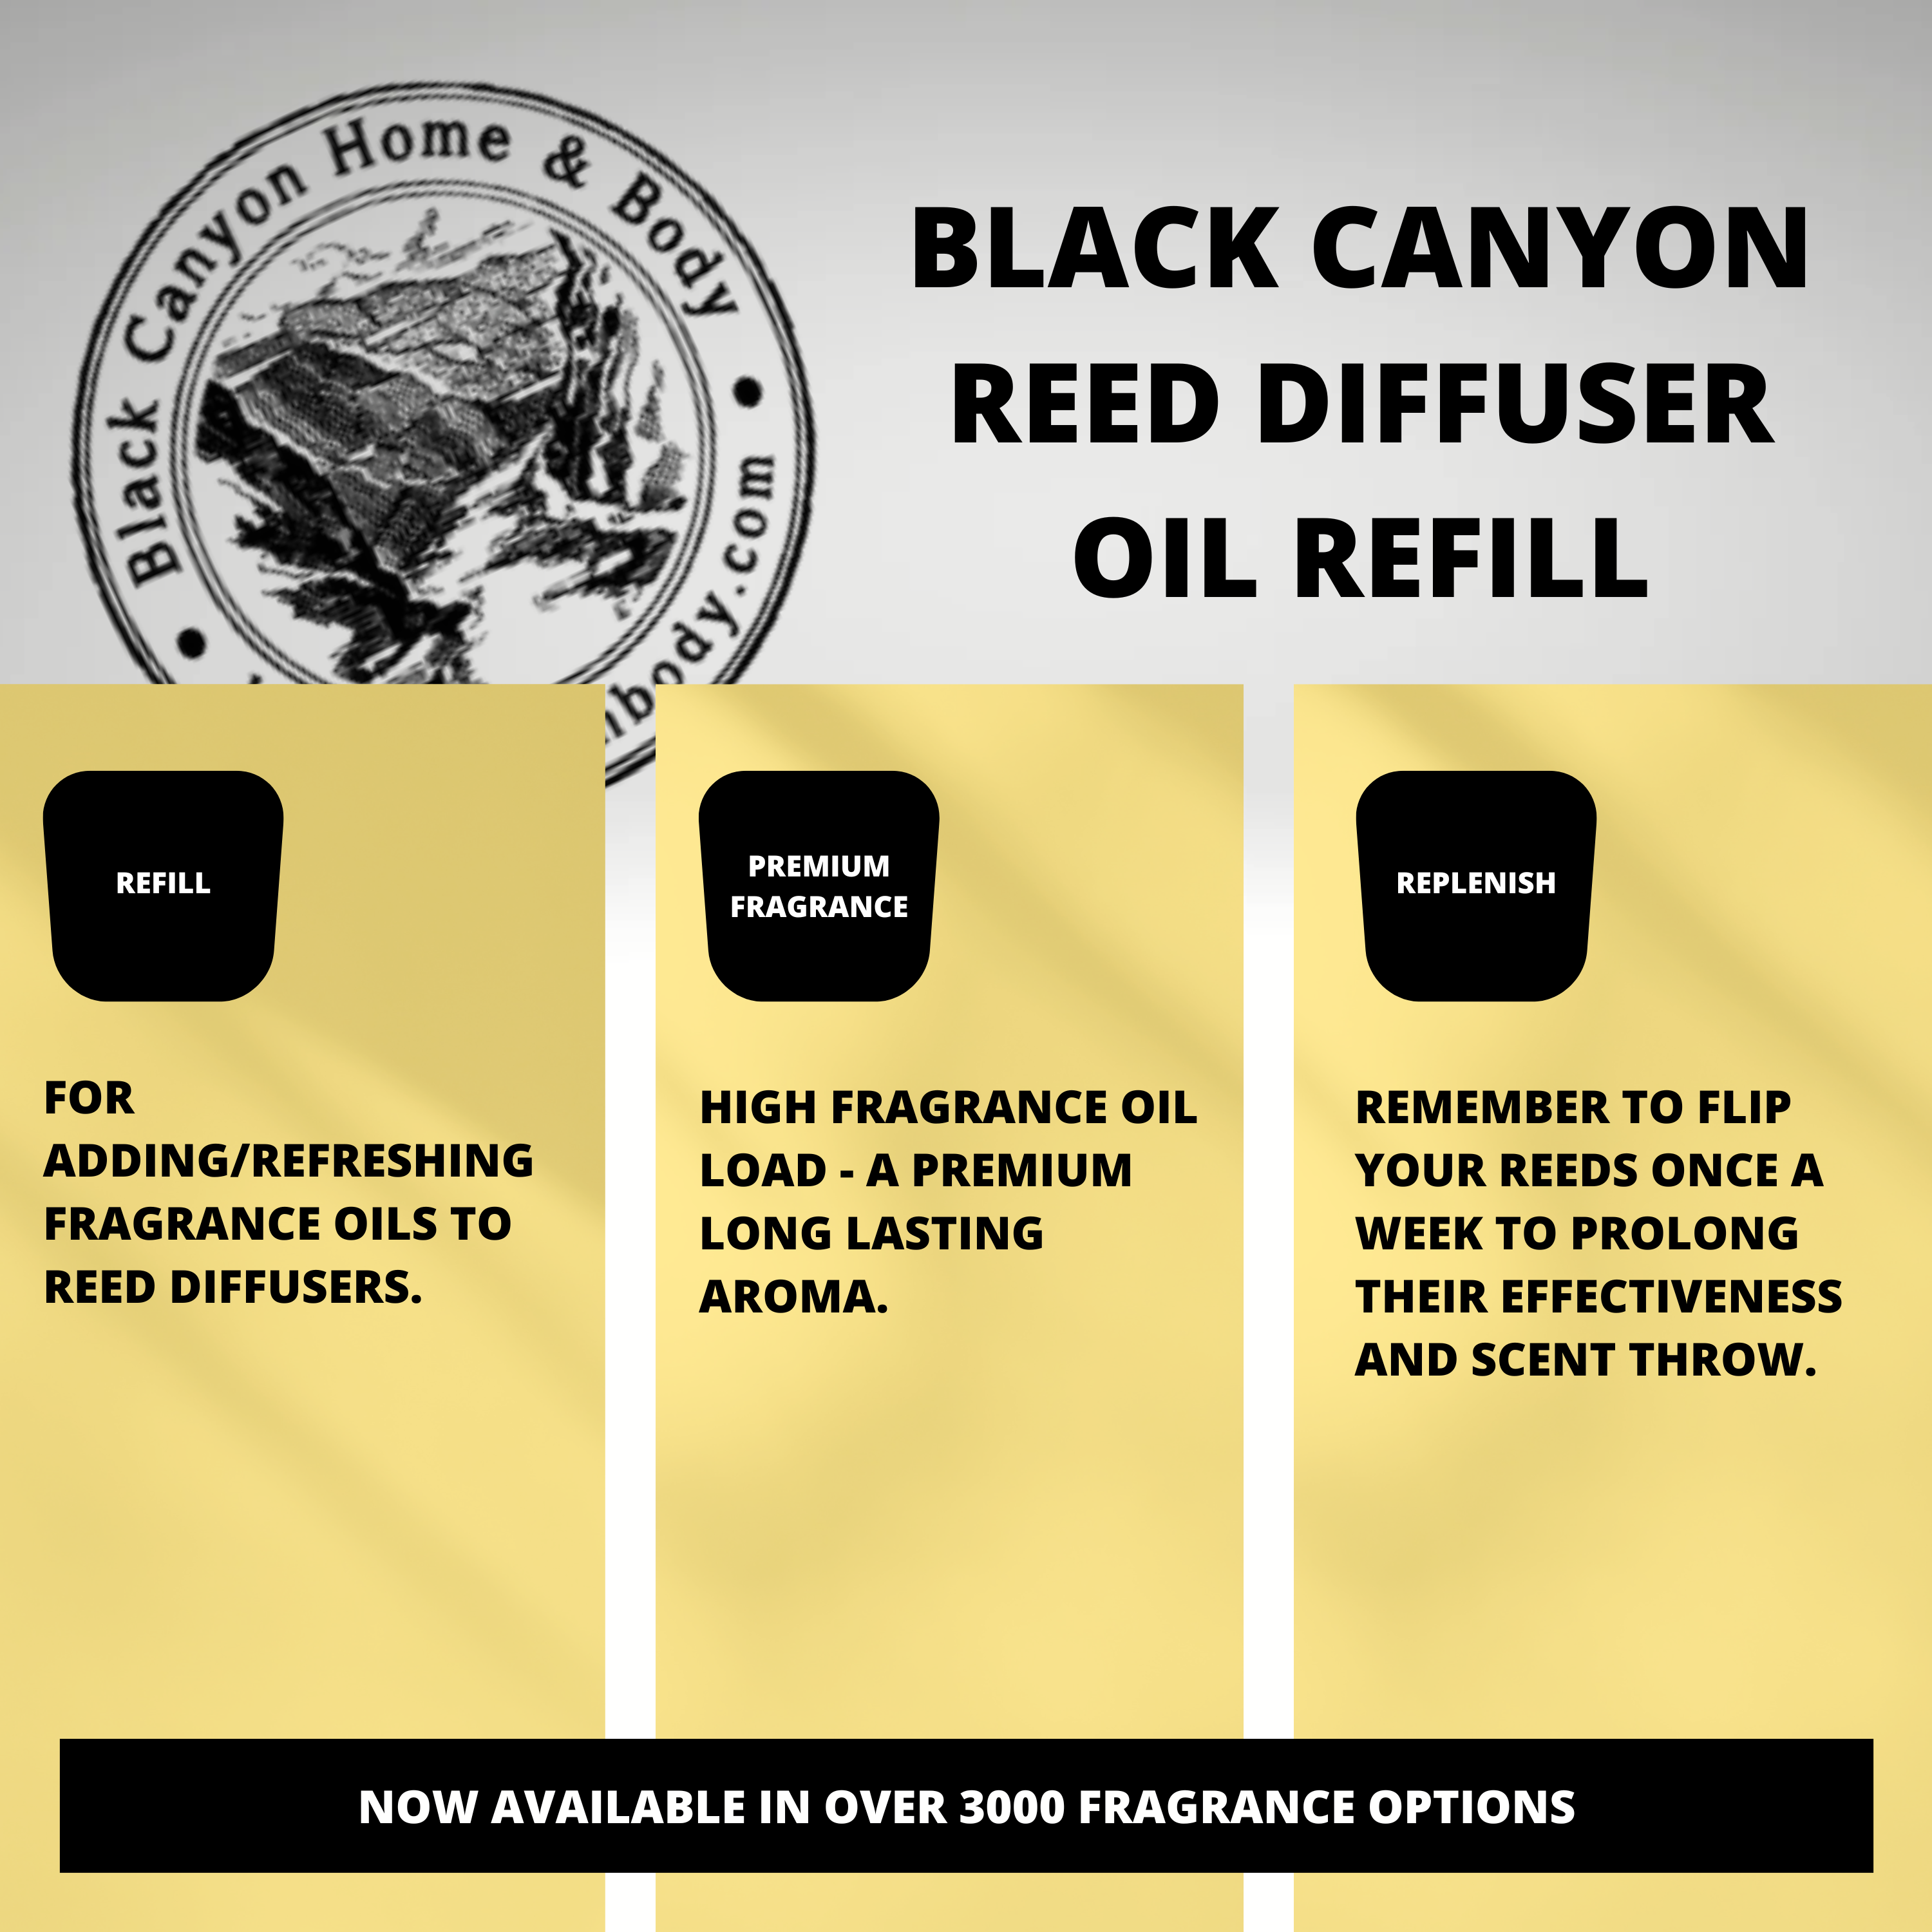 Black Canyon Dulce De Leche Scented Reed Diffuser Oil Refill